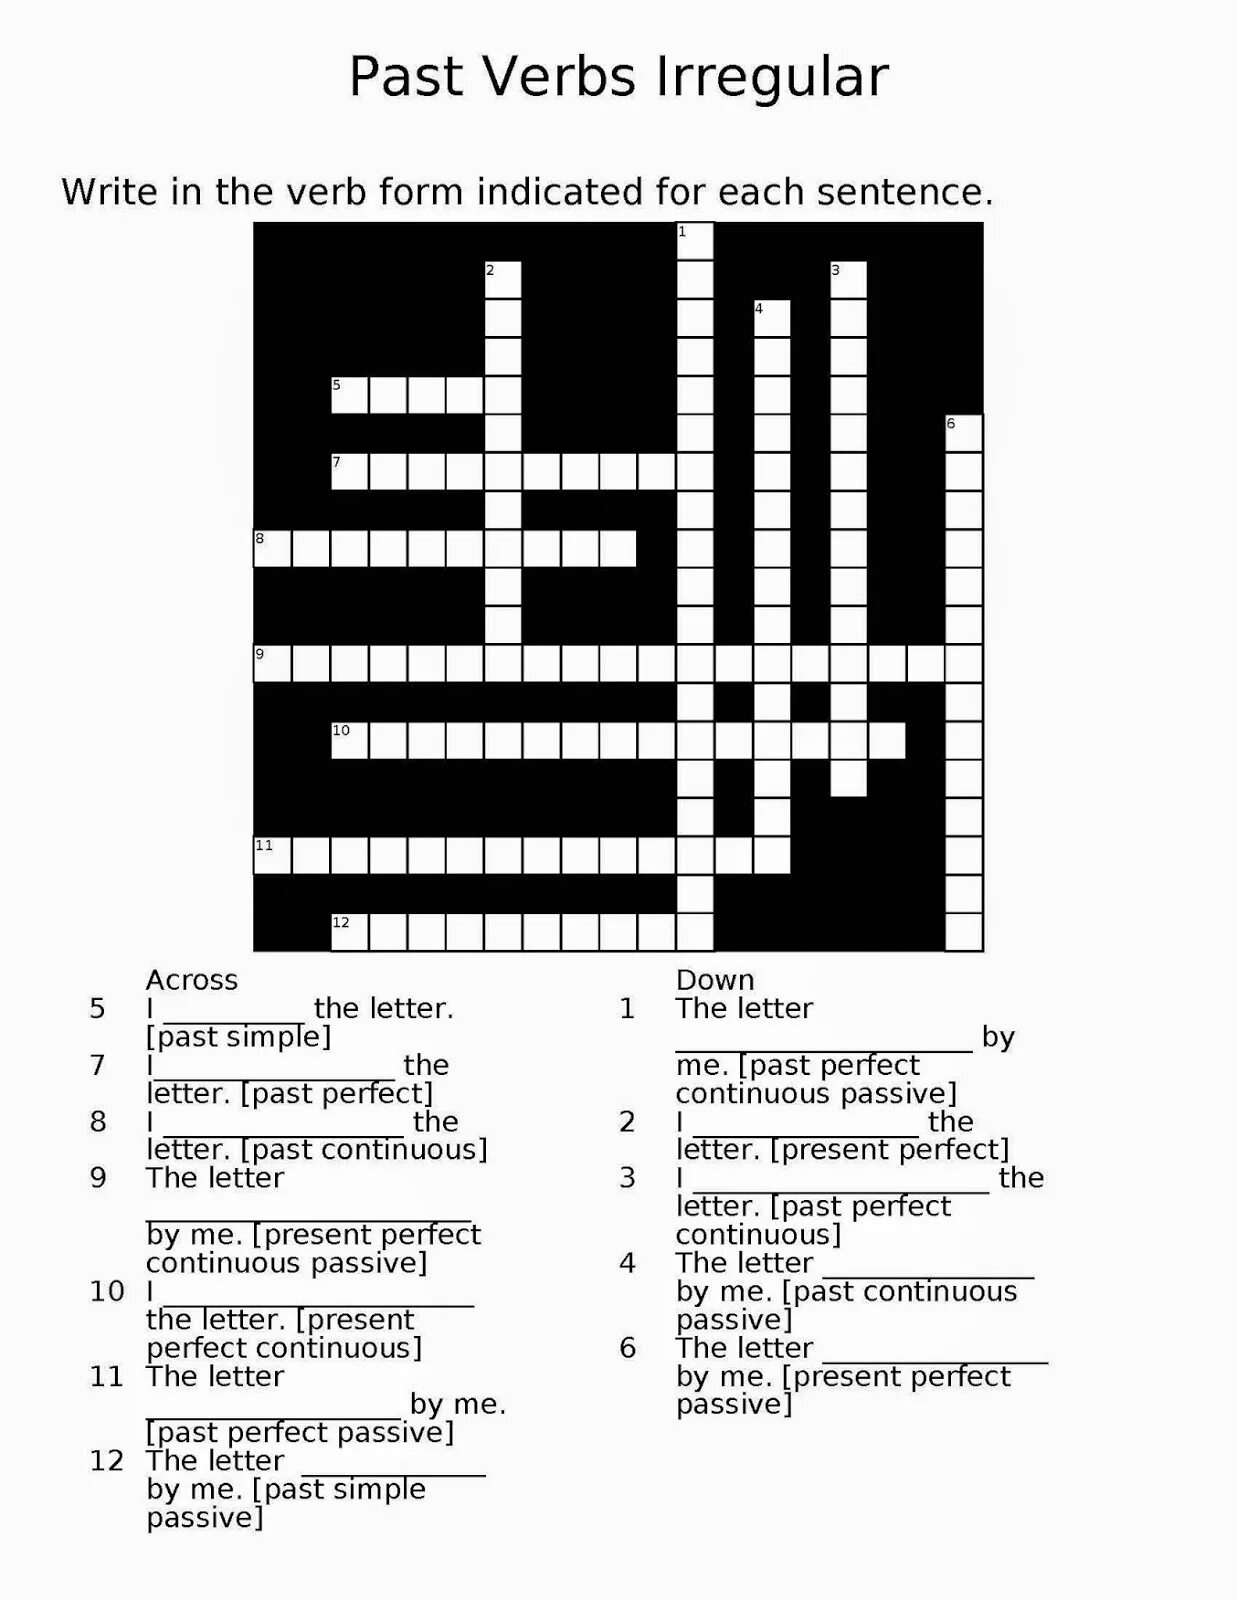 Кроссворд на past perfect. Crossword Puzzle Irregular verbs ответы. Past Continuous crossword. Irregular verbs crossword